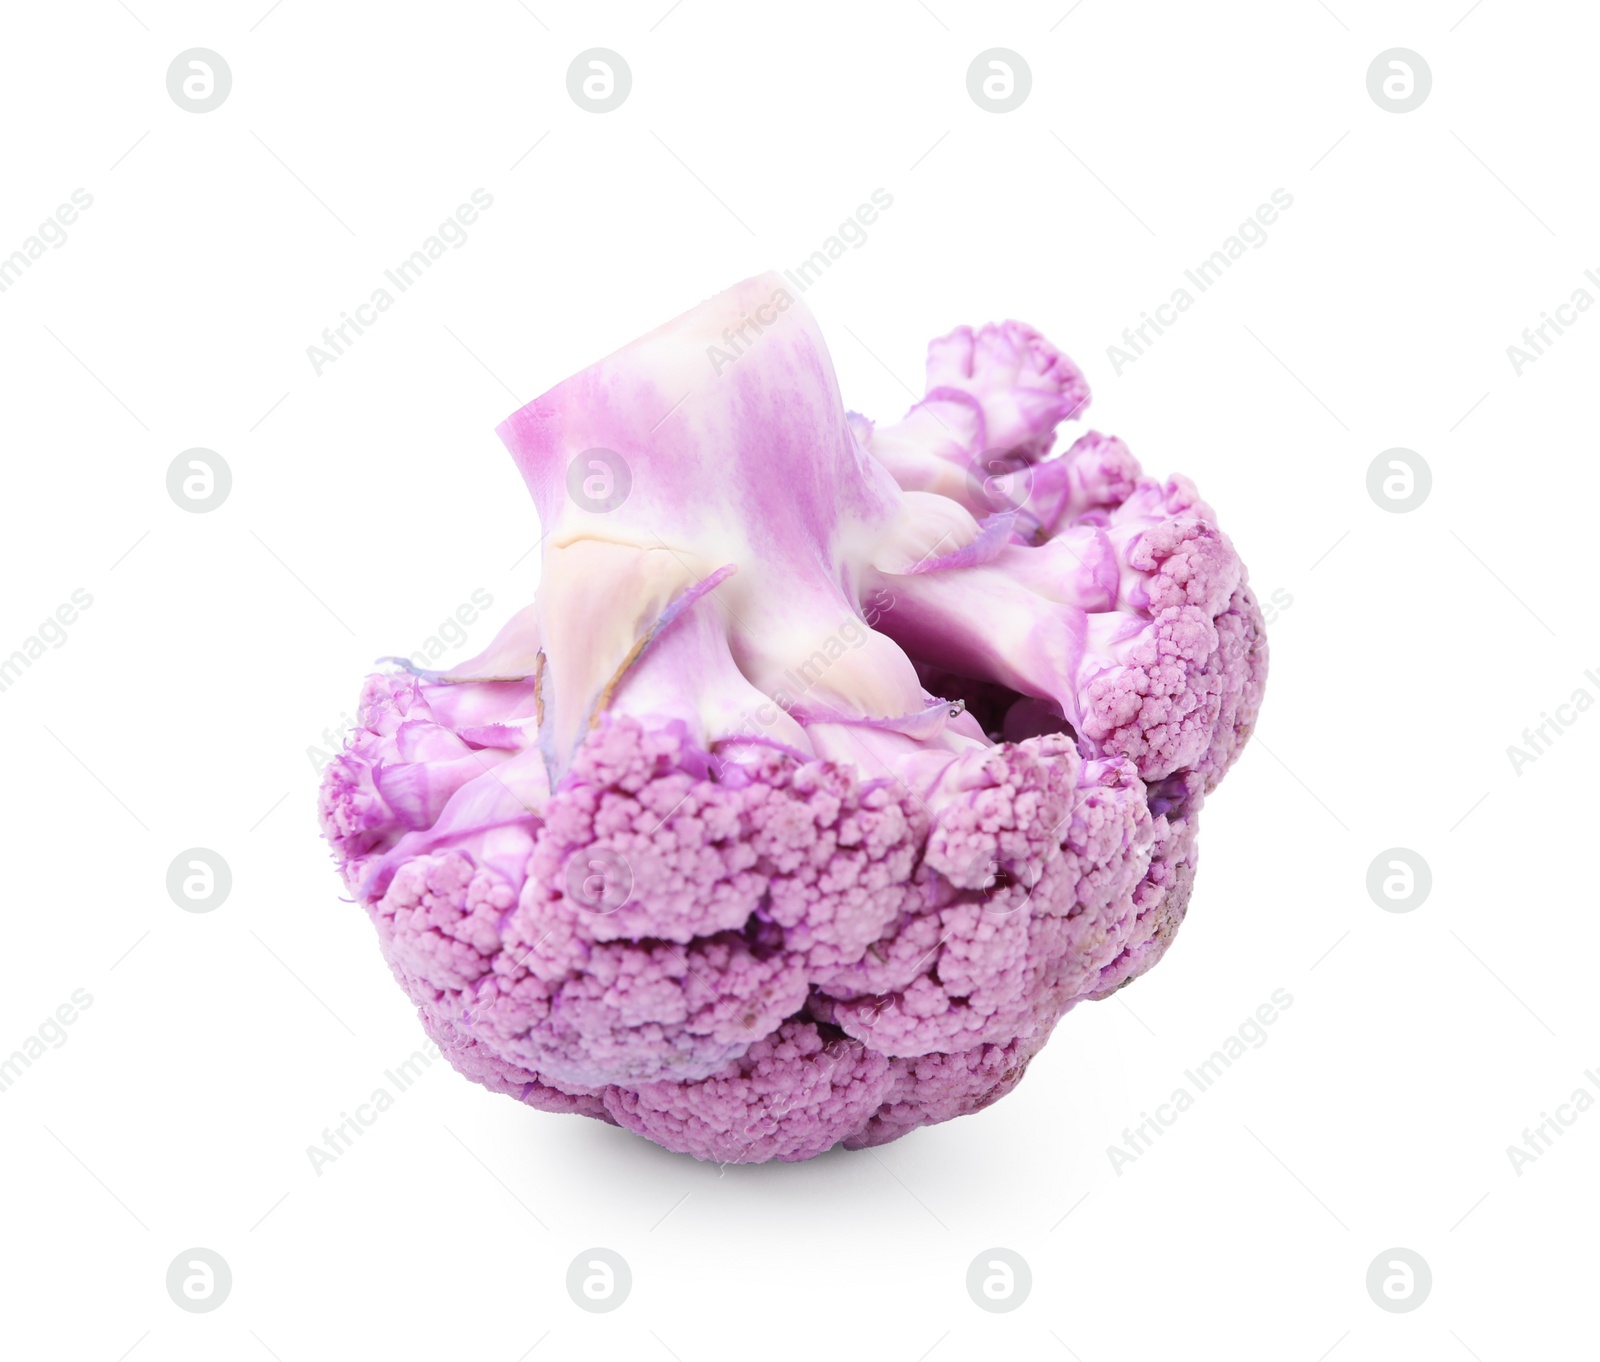 Photo of Cut purple cauliflower on white background. Healthy food